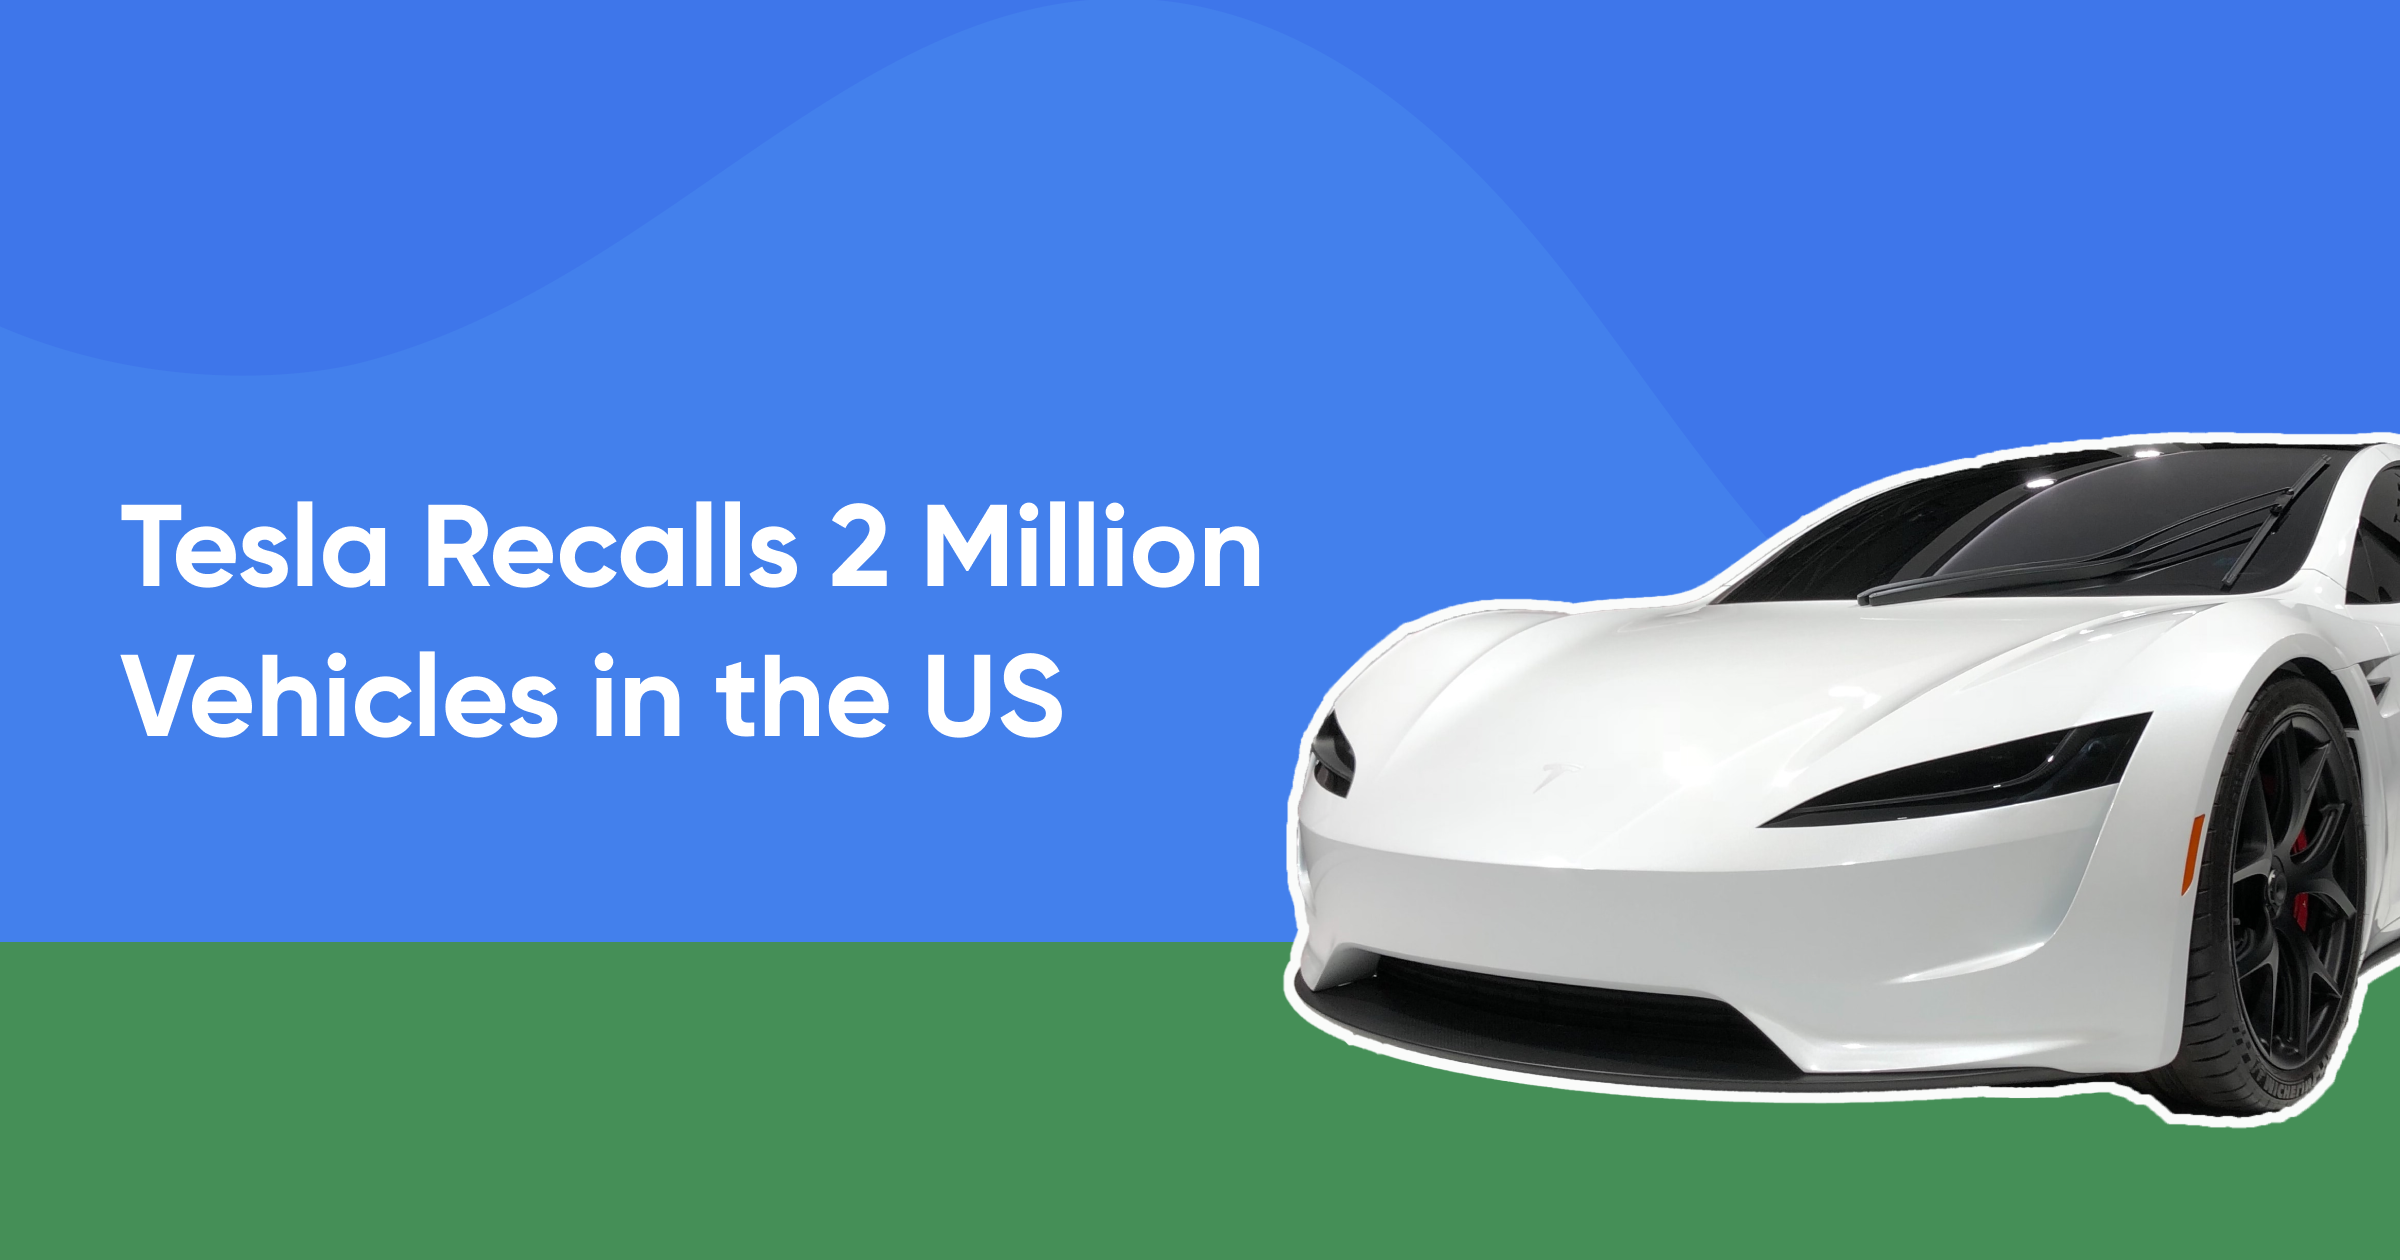 Tesla Recalls 2 Million Vehicles in the US